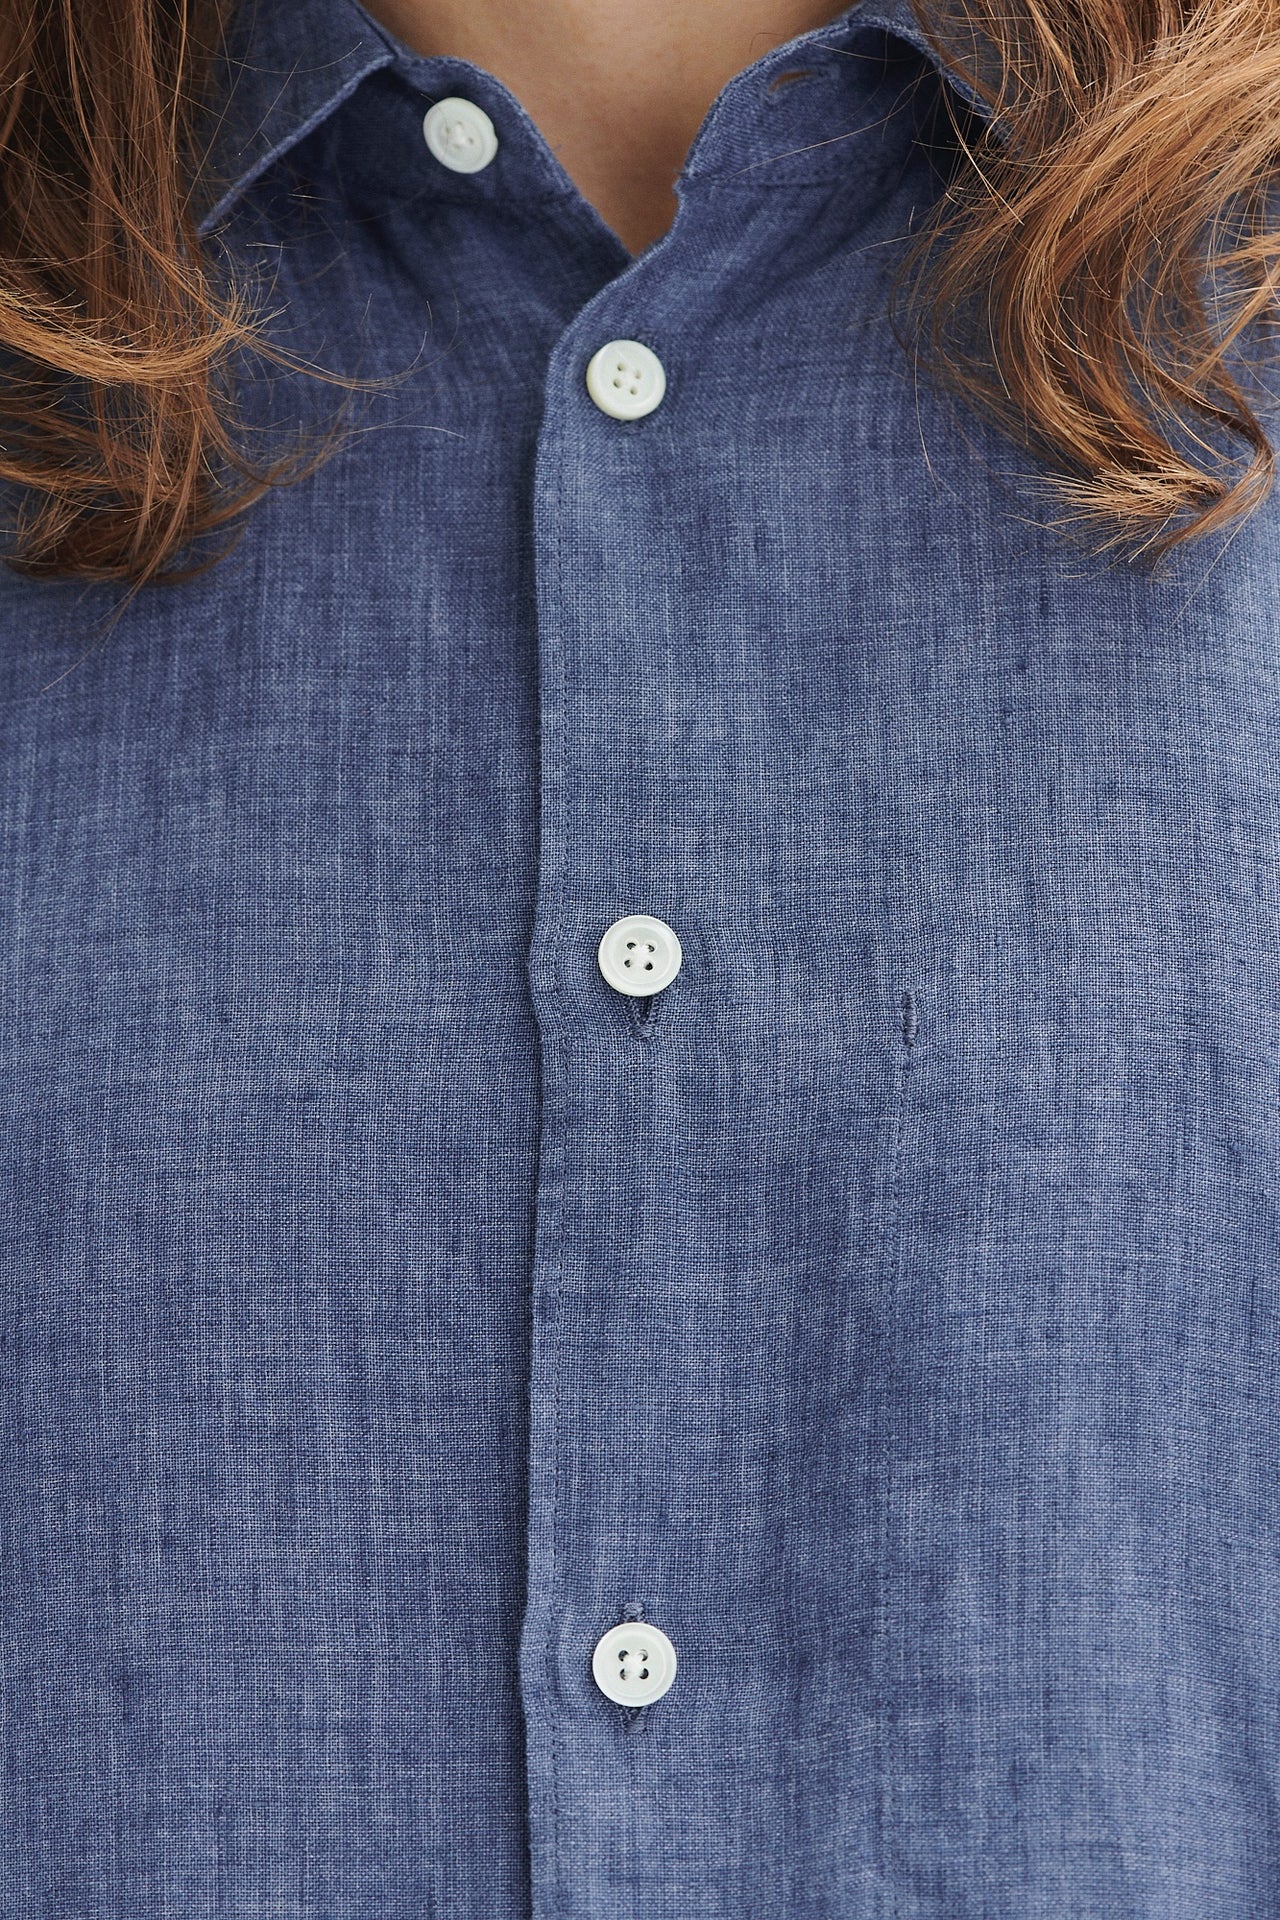 Feel Good Shirt in the Finest Blue Italian Linen